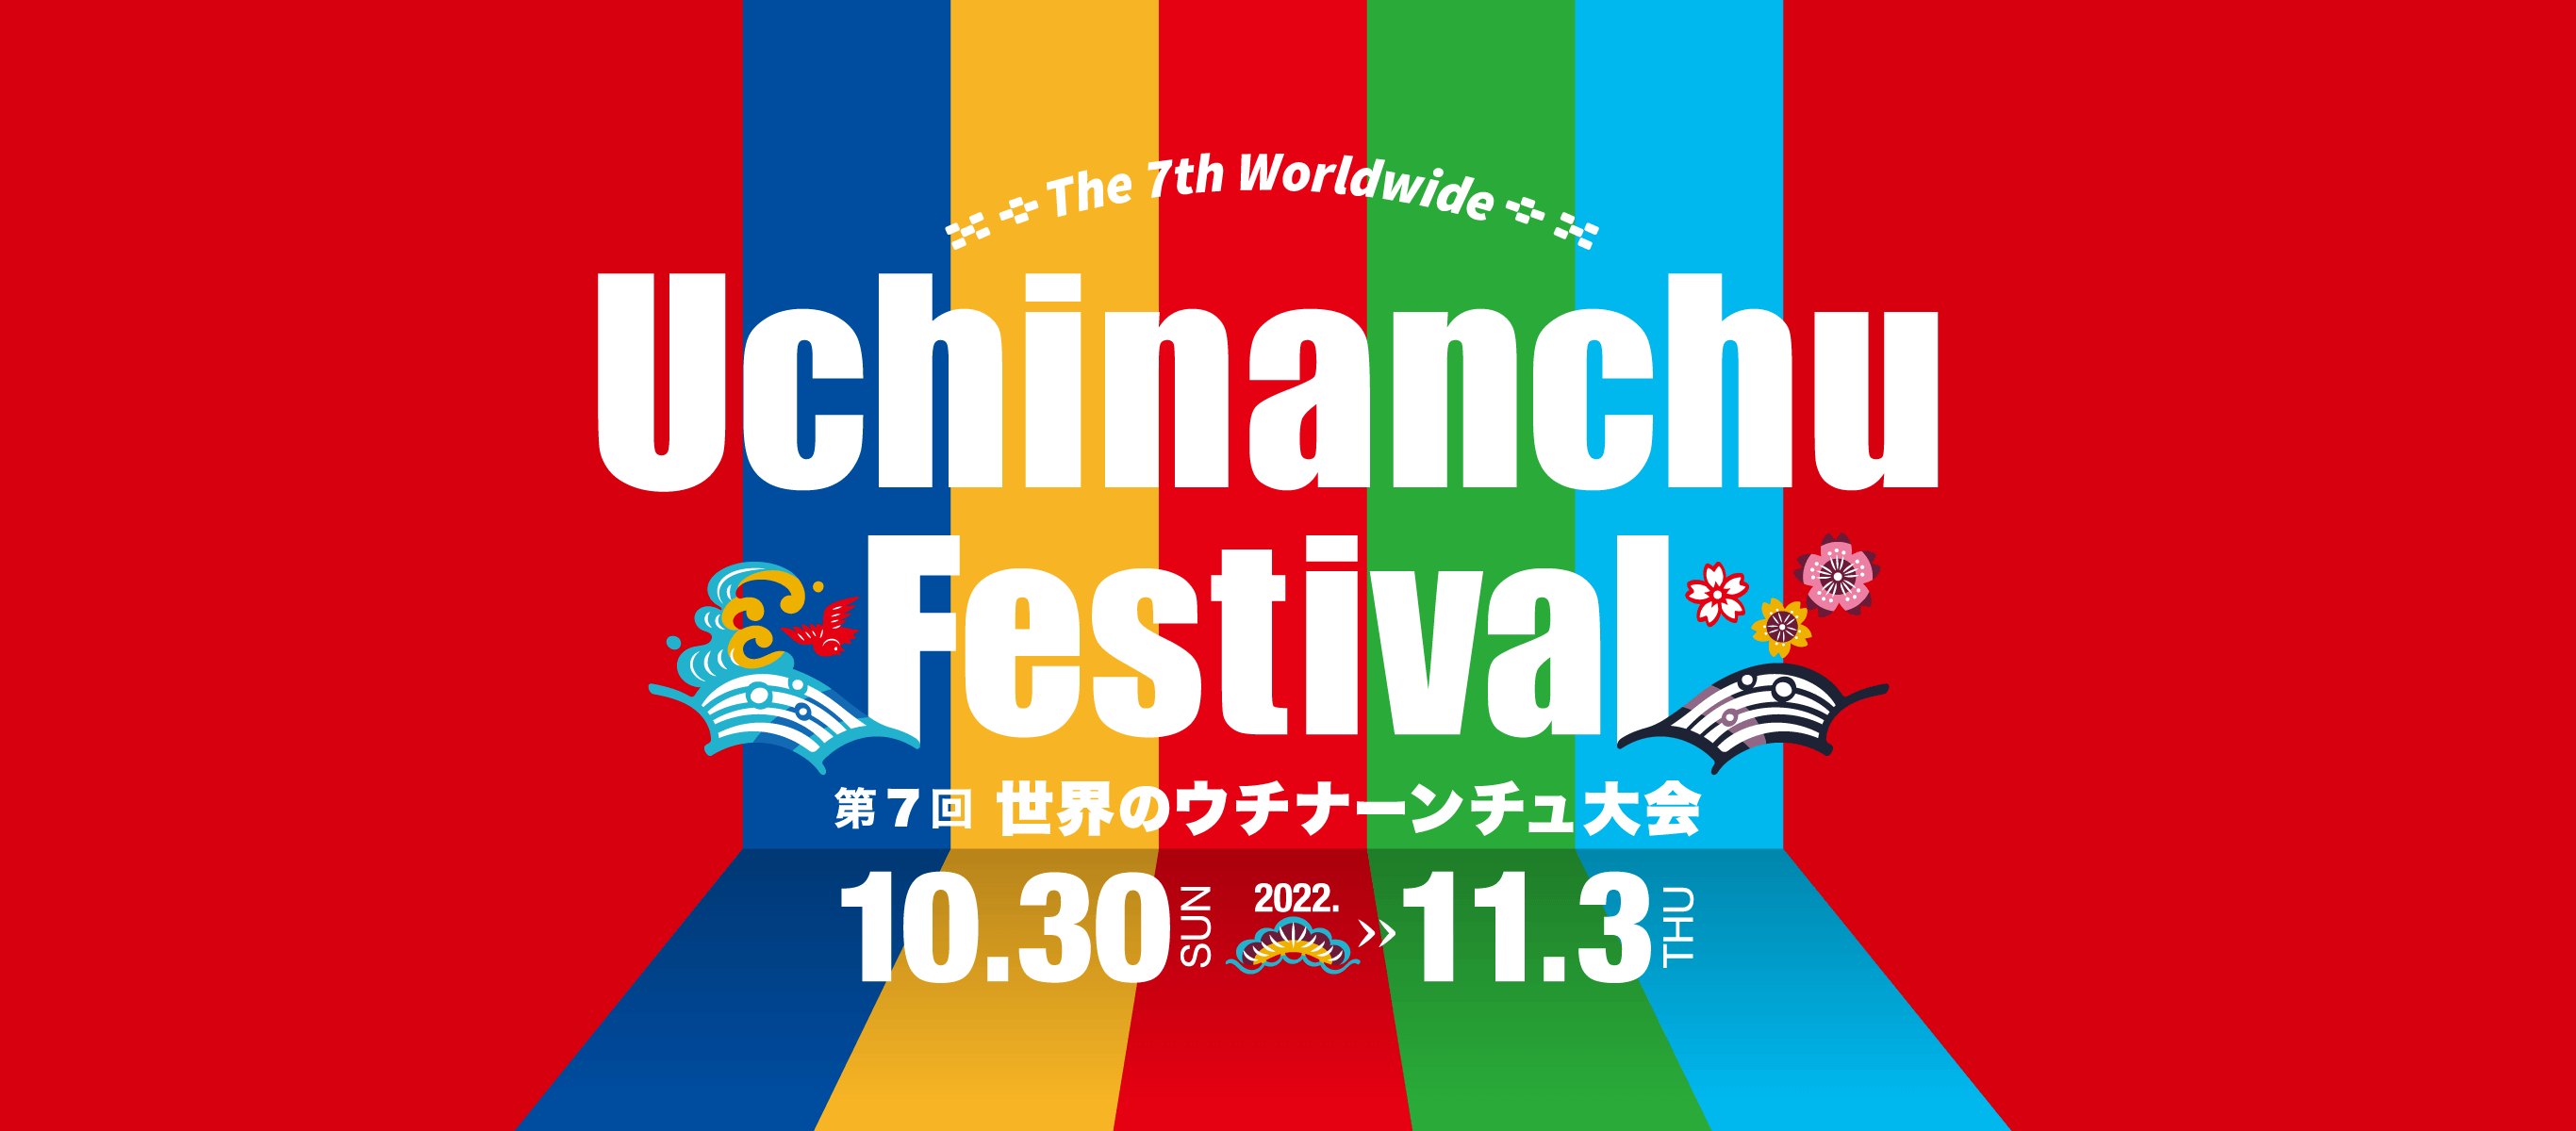 Uchinanchu Festival